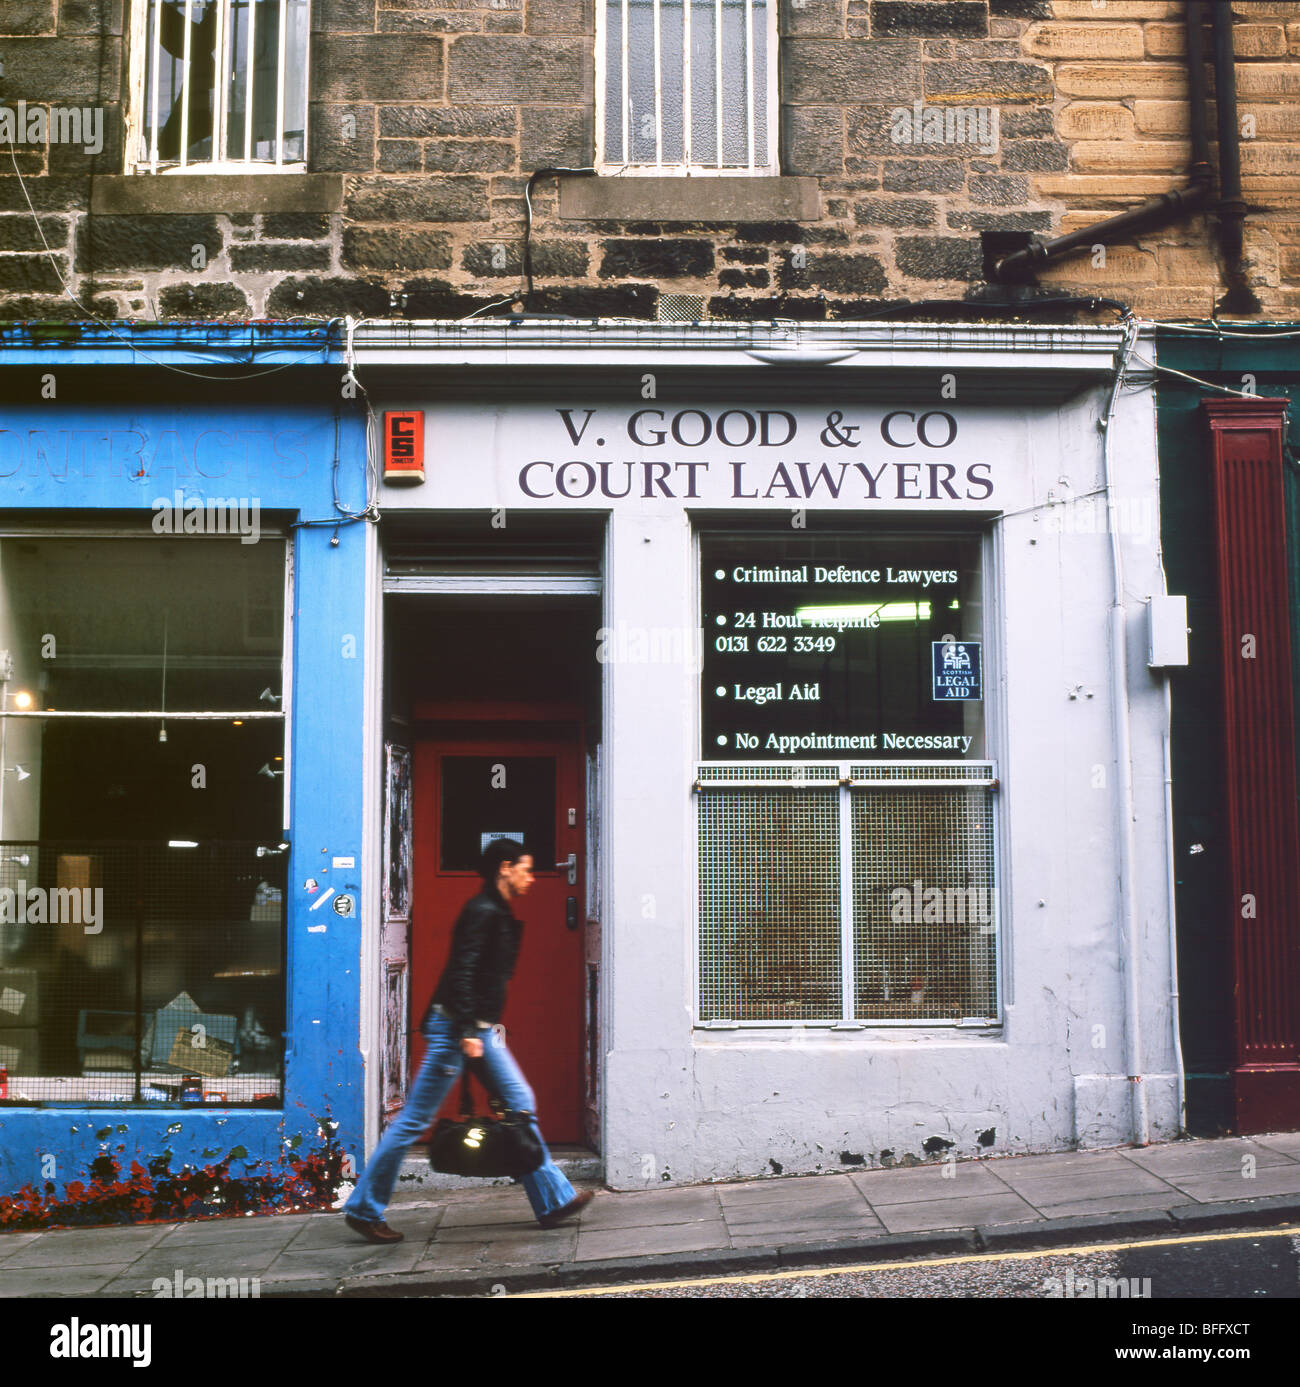 V. Good & Co Court Criminal Defence Lawyers shop in Candlemaker Row, Edinburgh Scotland UK Stock Photo